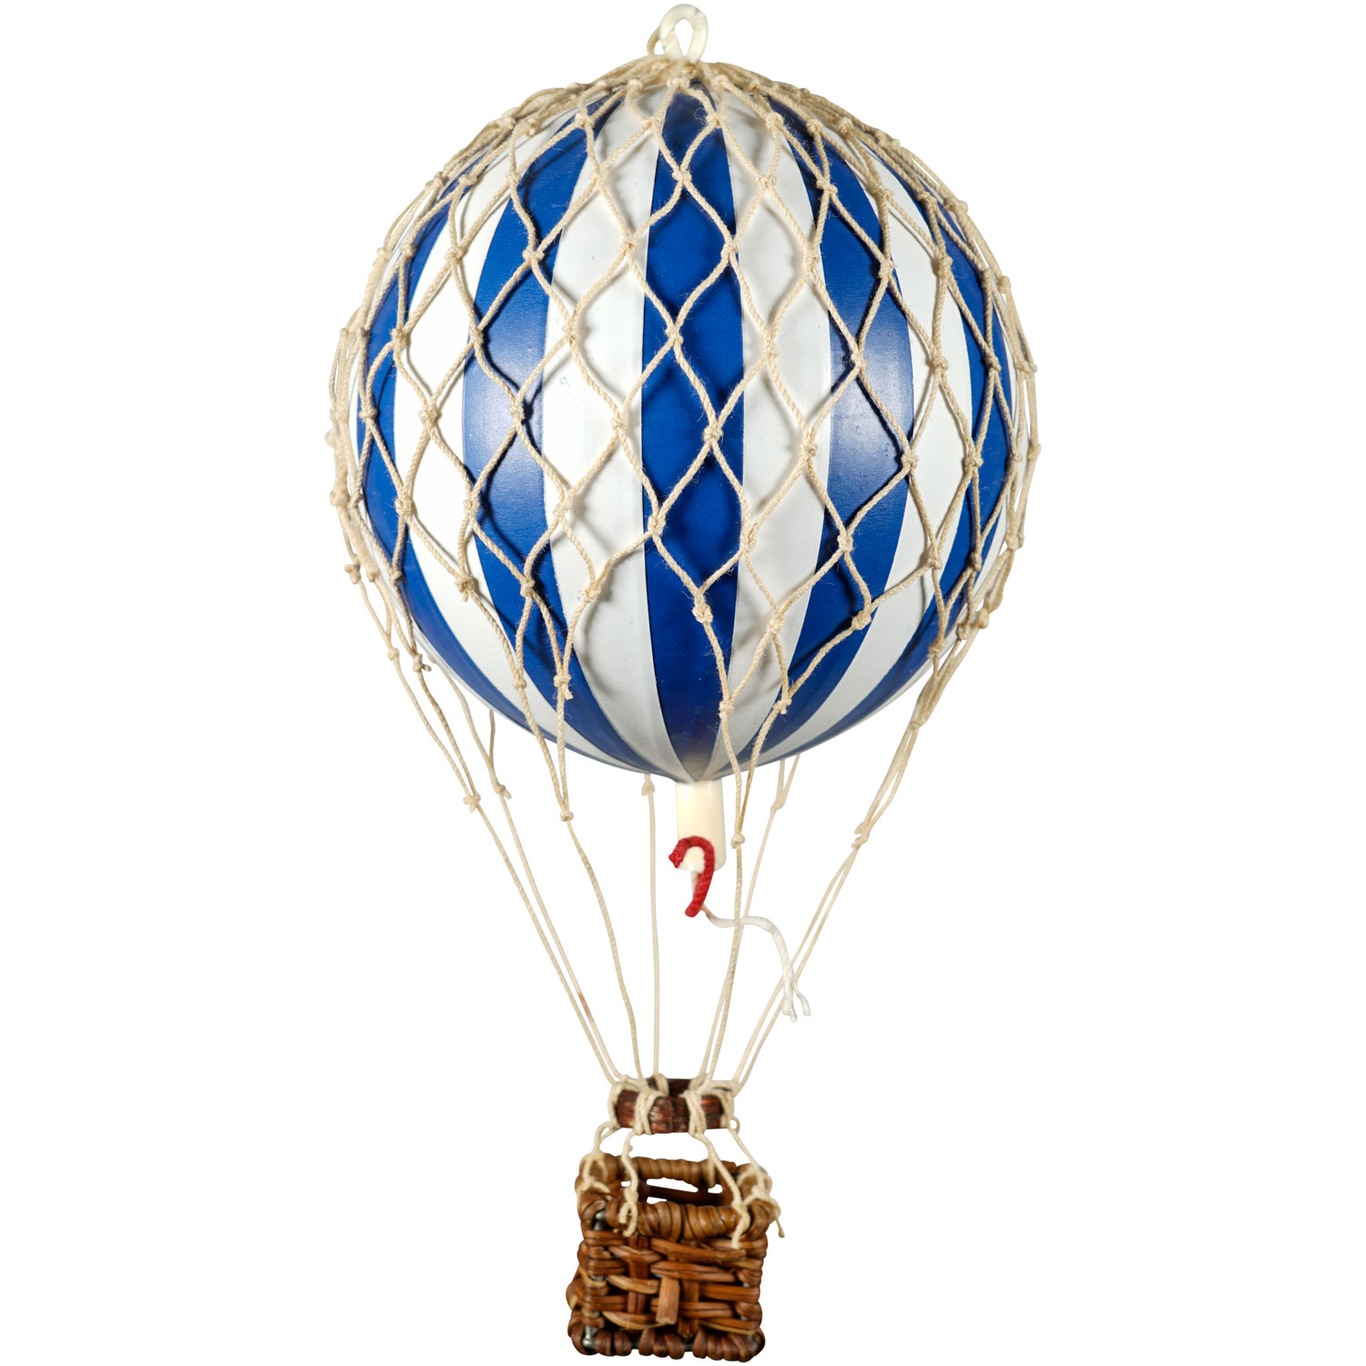 Floating The Skies Air Balloon 13x8.5 cm, Blue / White